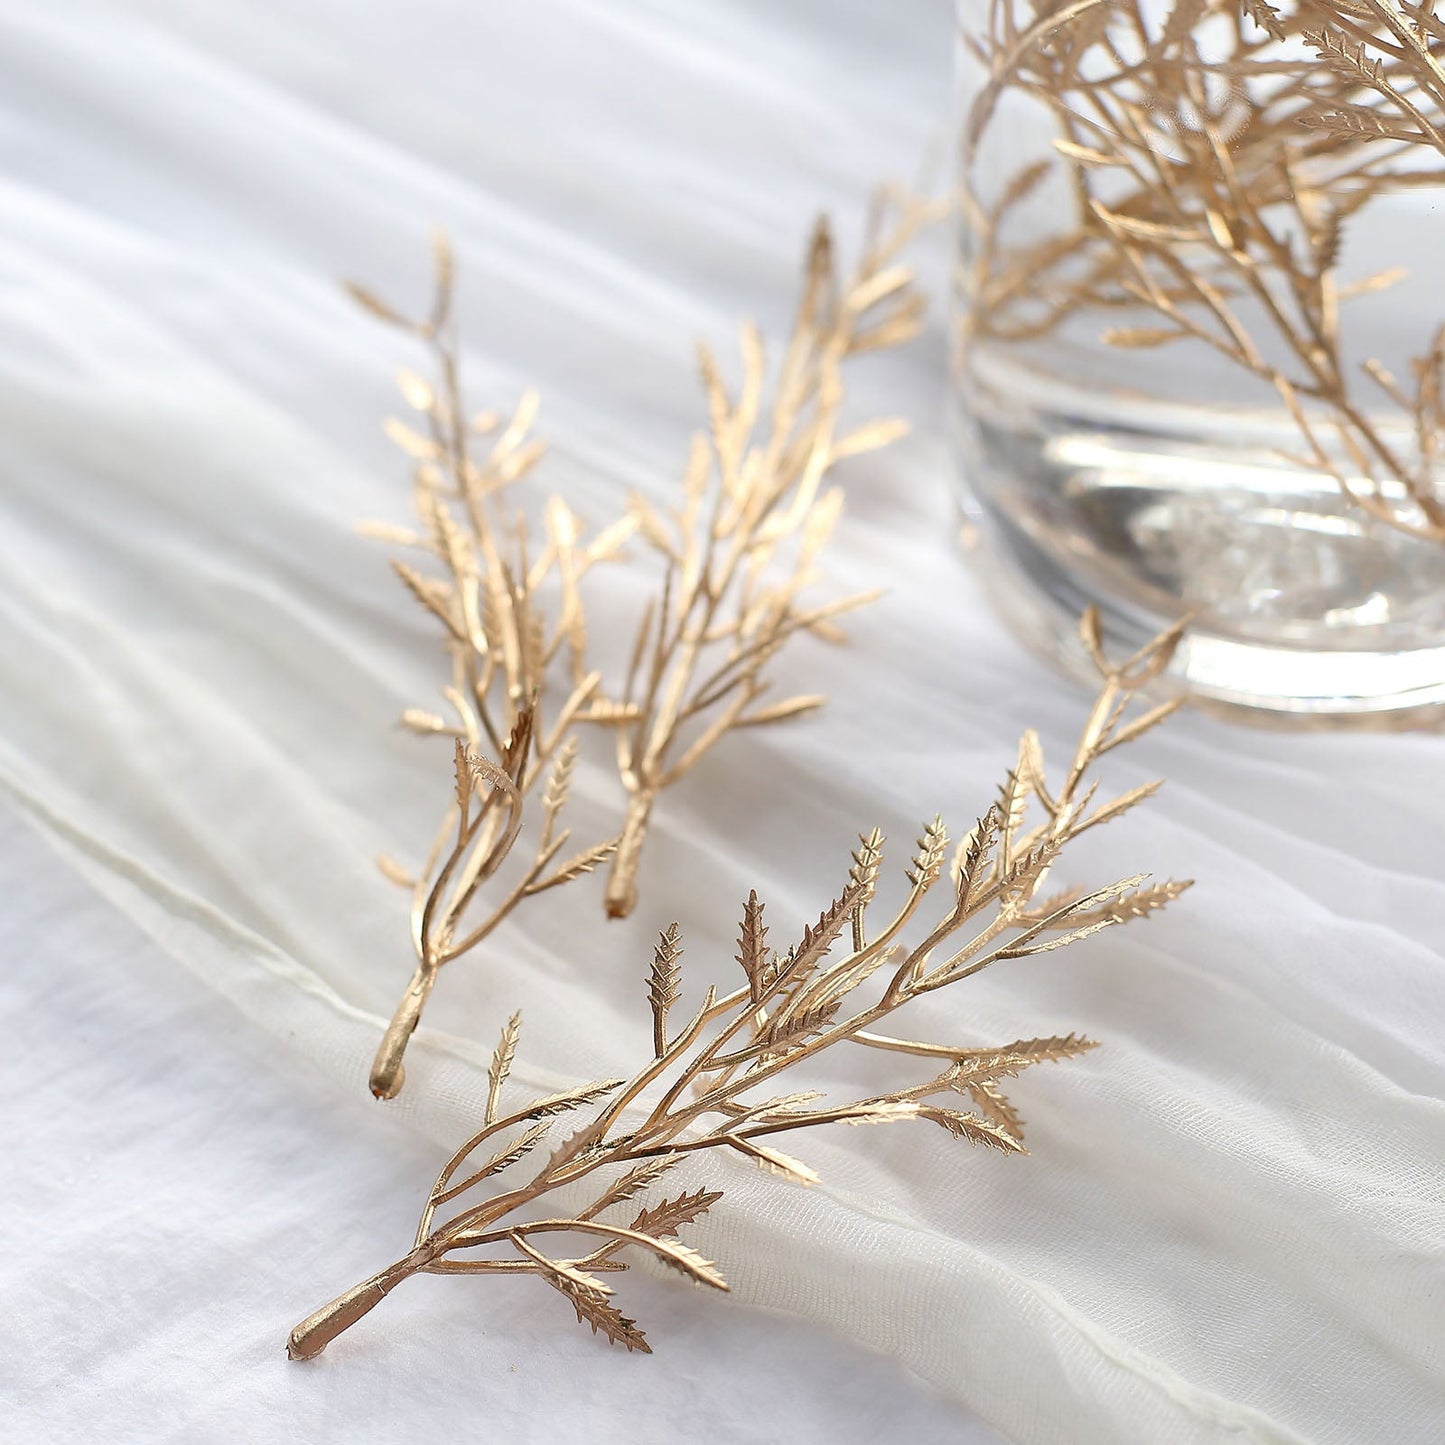 25 Pack Mini Metallic Gold Artificial Fern Leaf Branch Stems, Flower Vase Filler For Floating Candle Centerpieces 6"